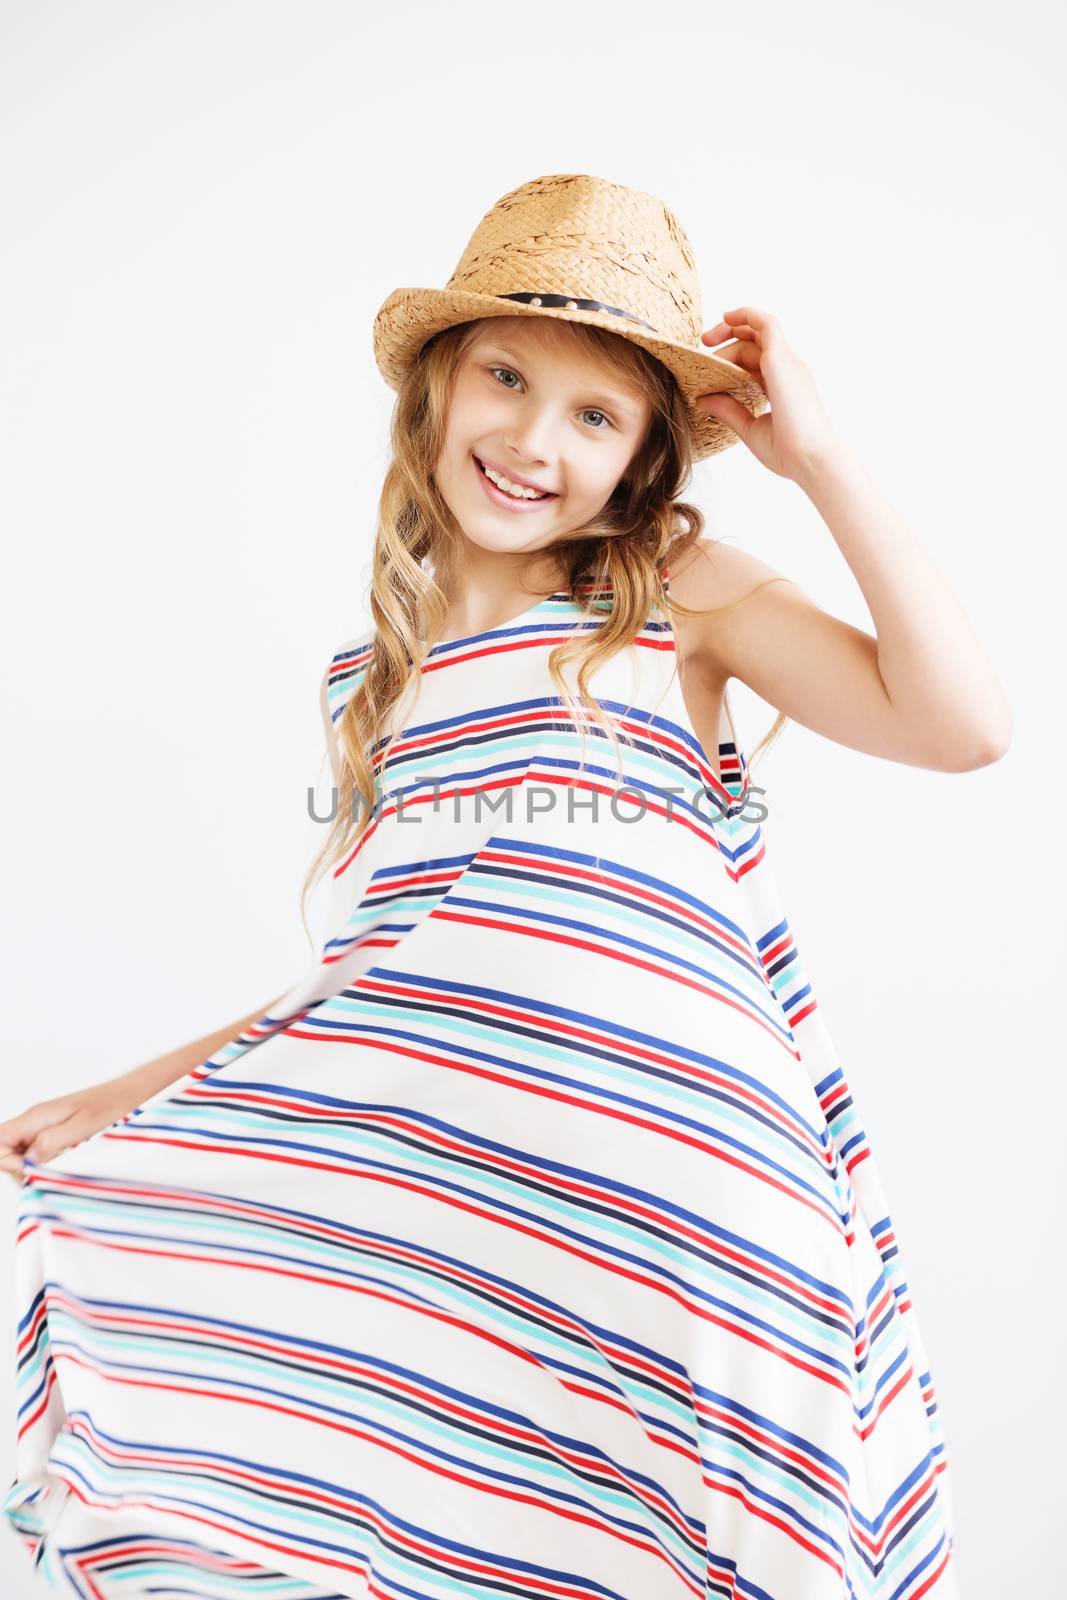 Lovely little girl in straw hat against a white background. Smiling summer kids